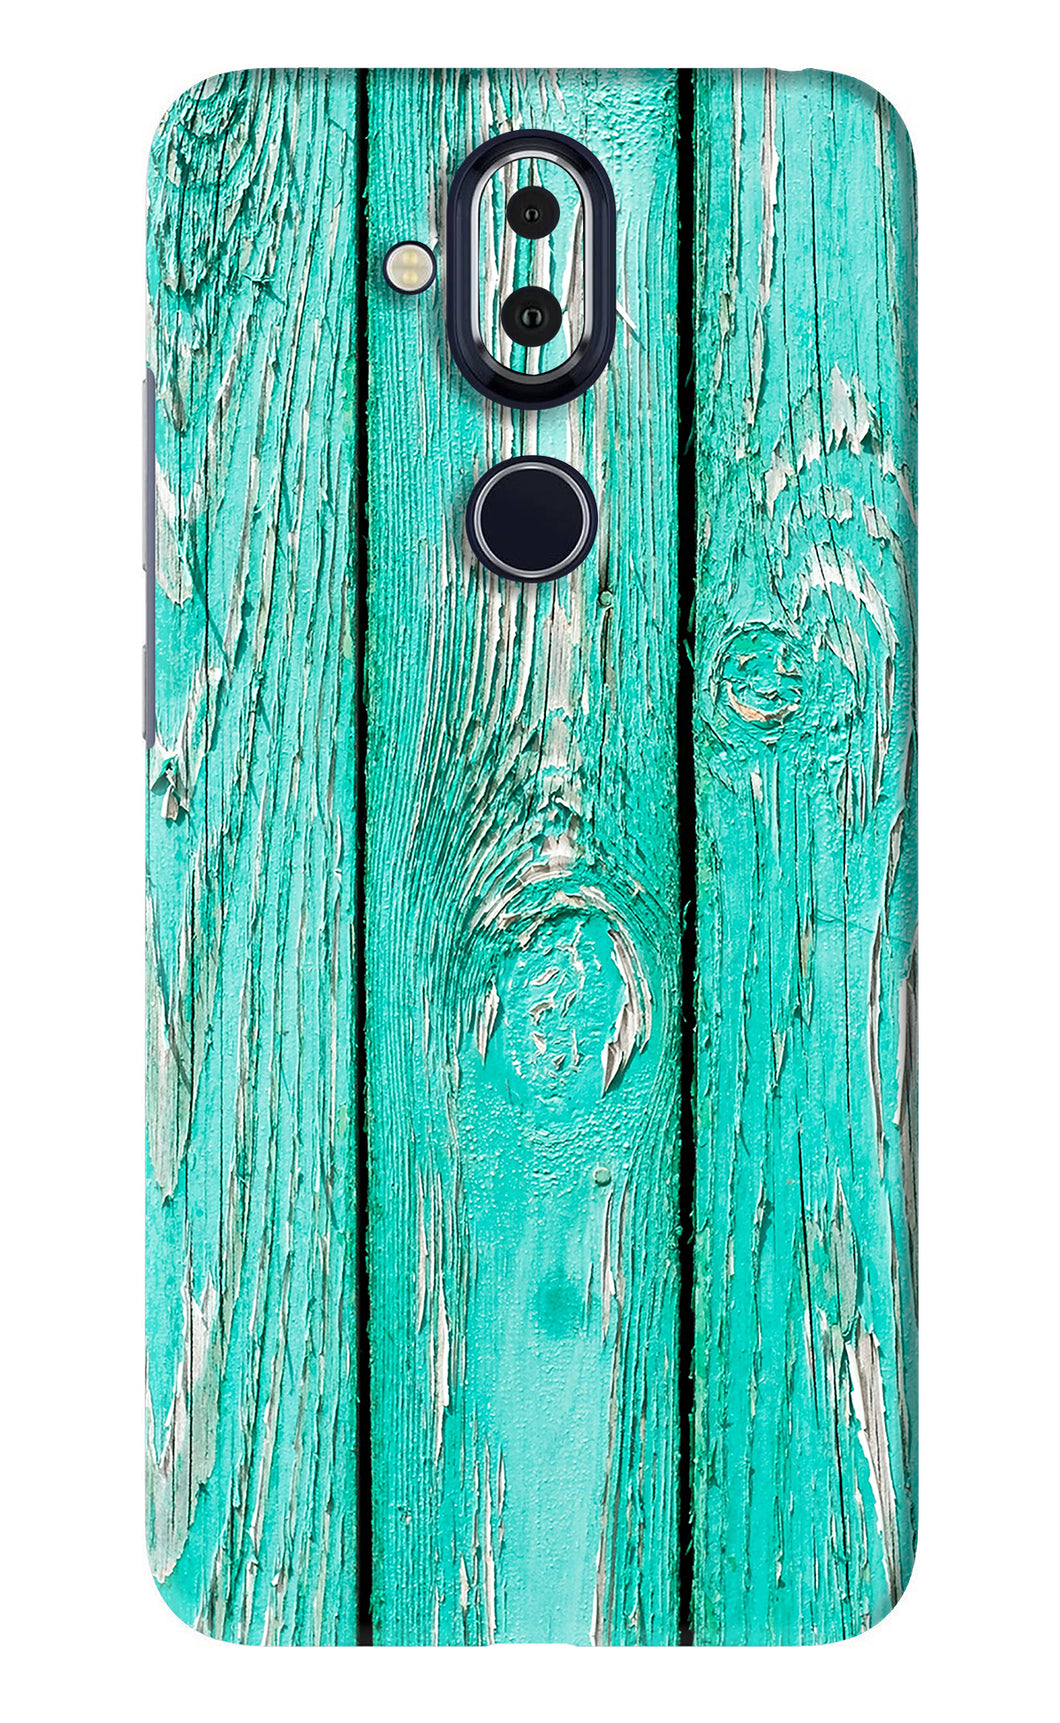 Blue Wood Nokia 8 Back Skin Wrap